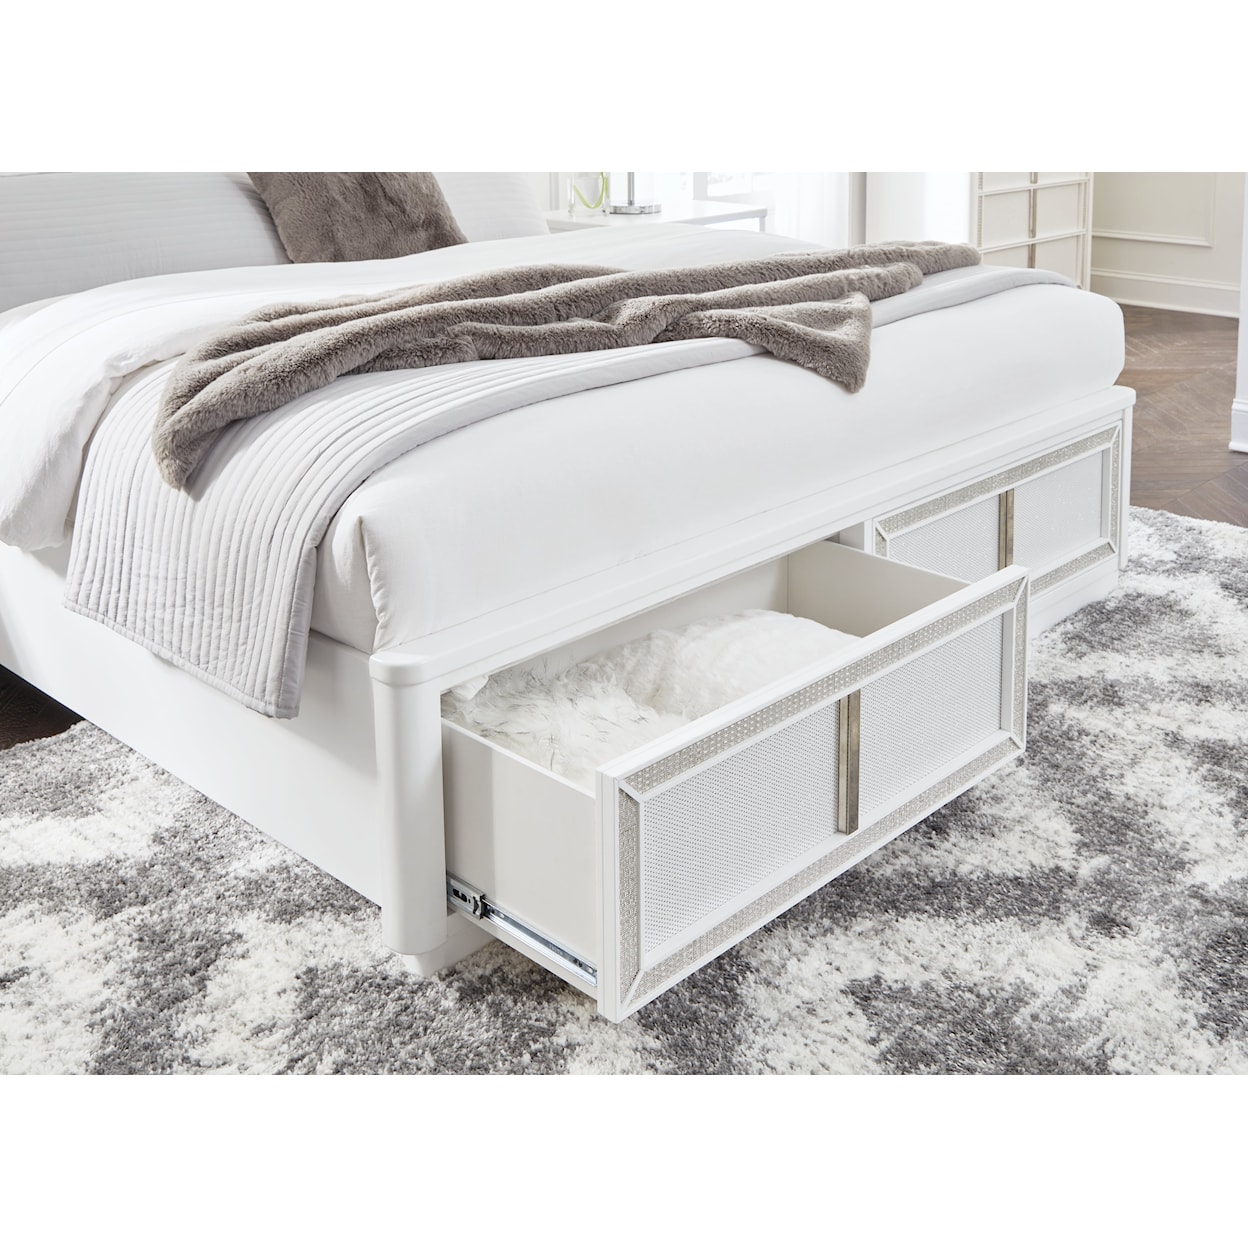 Benchcraft Chalanna King Upholstered Storage Bed